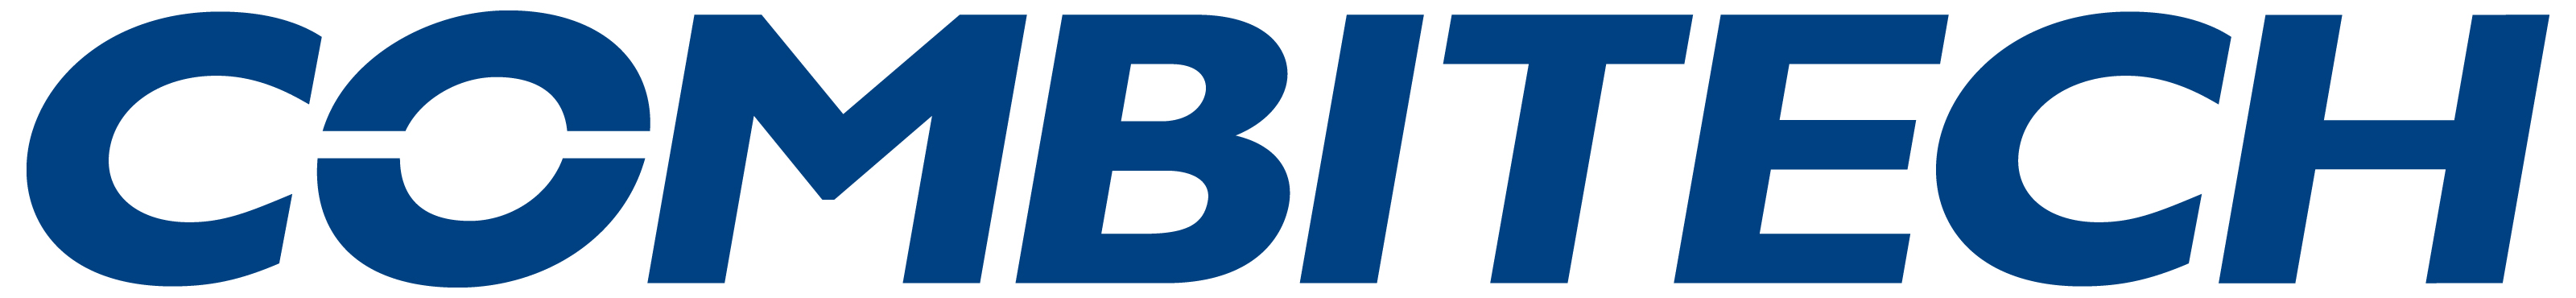 combitech-logo.jpg